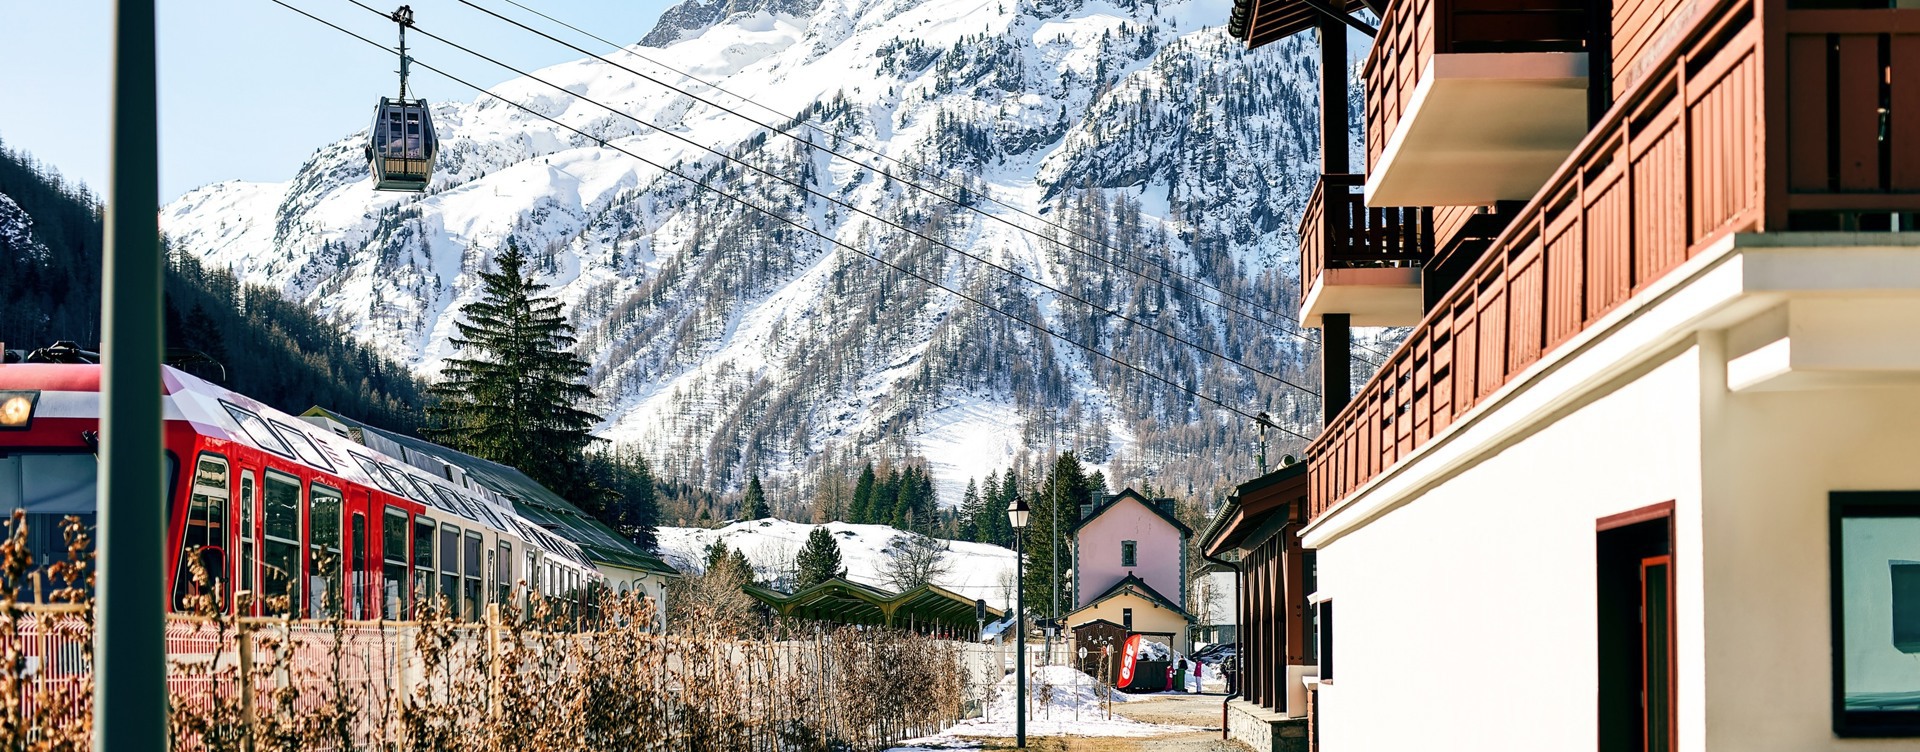 Enjoy the vibrant town centre of Chamonix 
or the surrounding ski areas